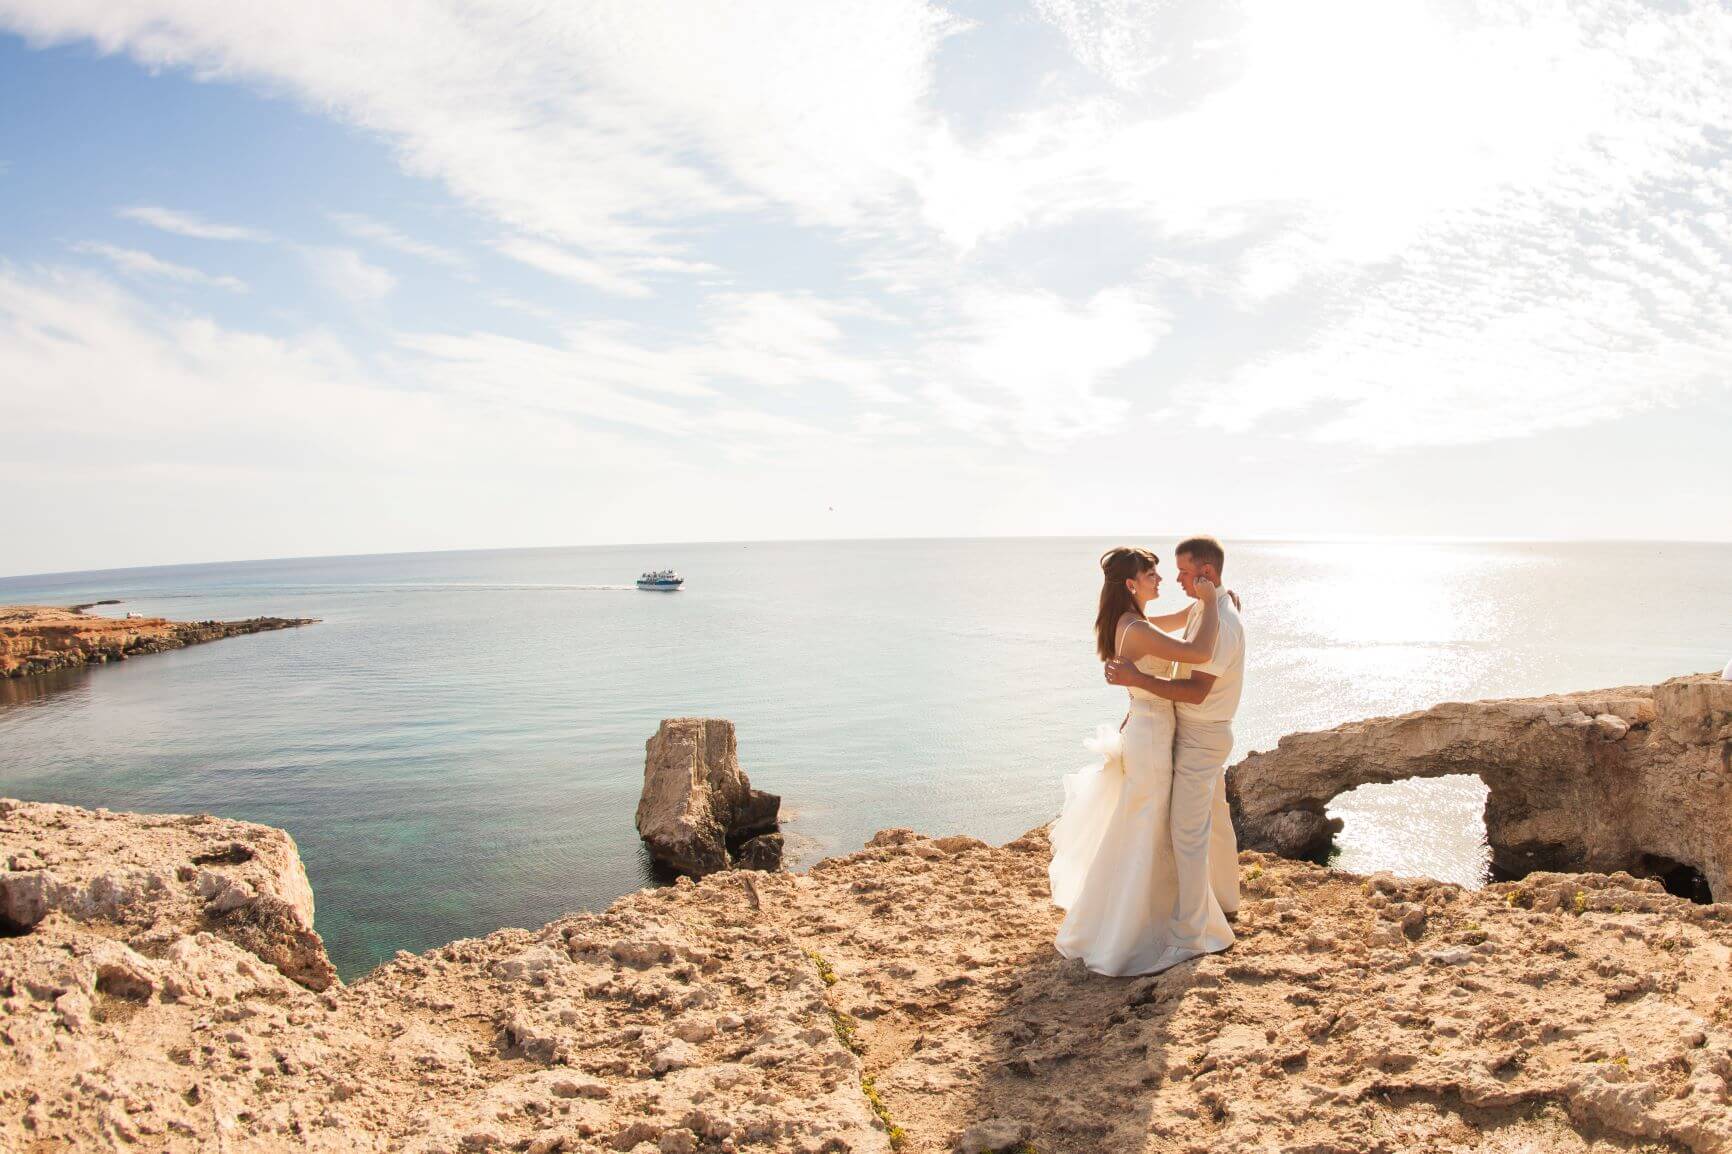 The Best Destination Weddings: #1 Cyprus Weddings